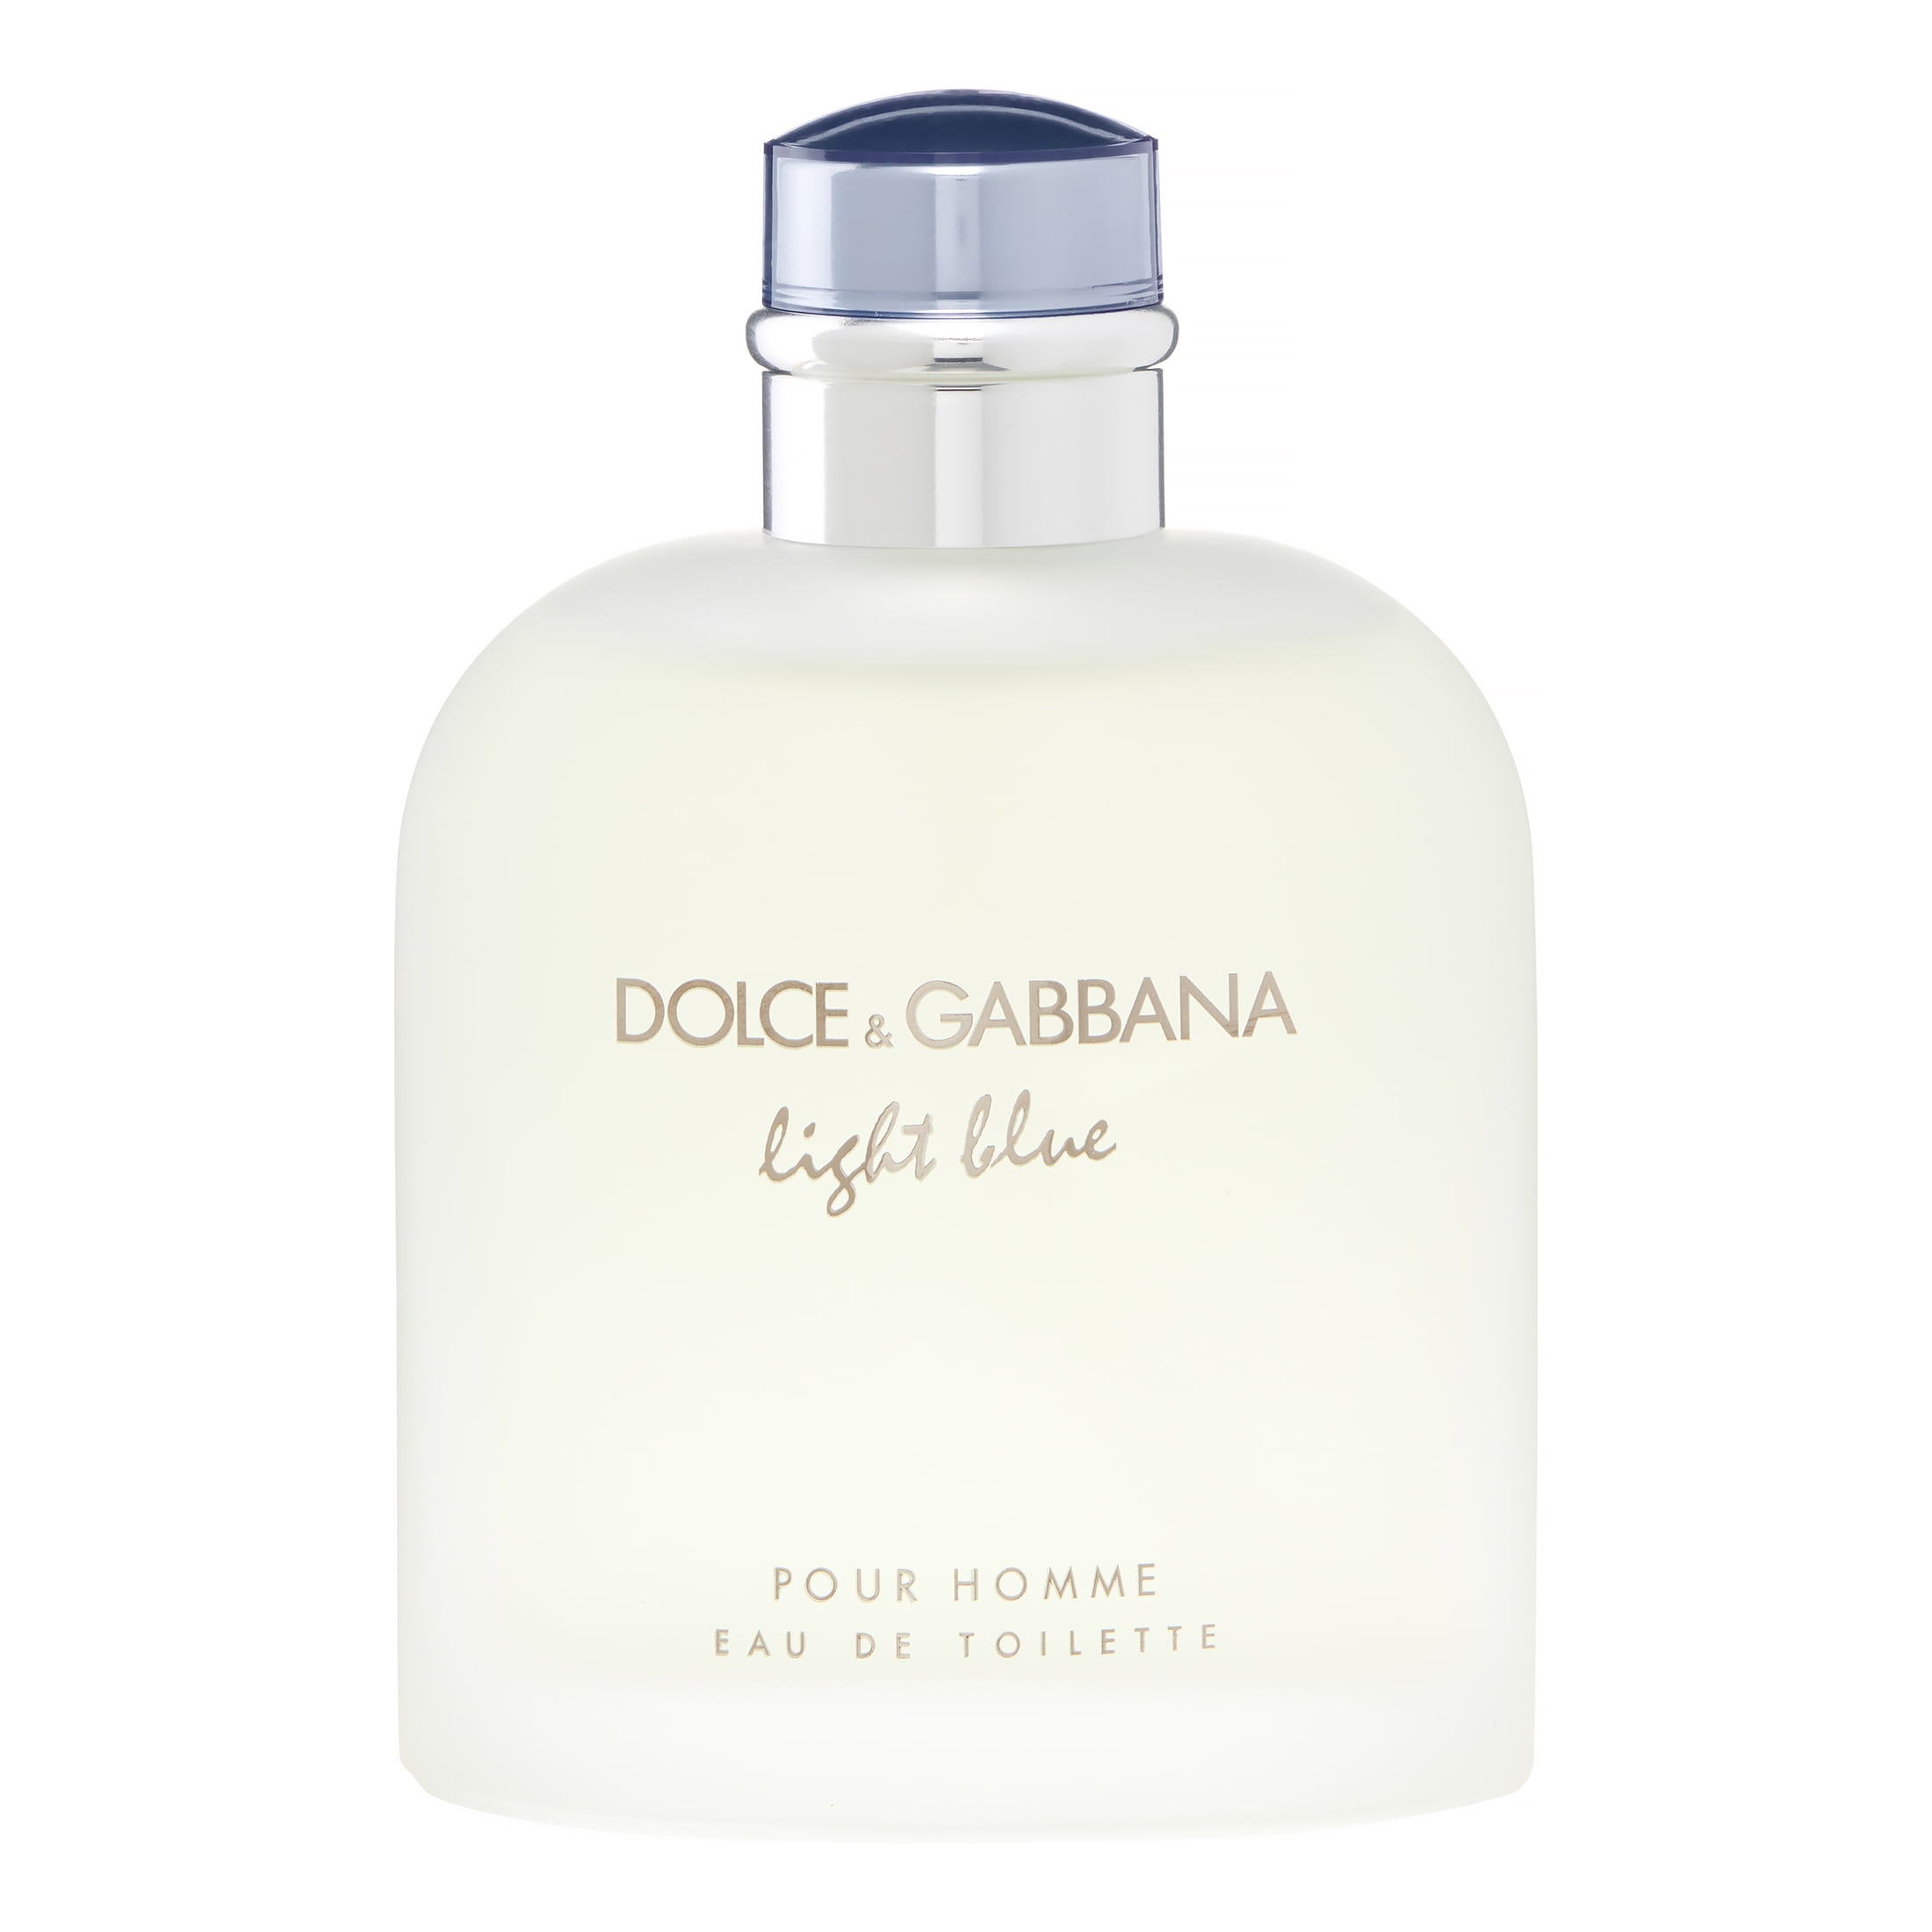 Dolce & Gabbana Light Eau de Toilette, Cologne for Men, 6.7 Oz Full - Walmart.com